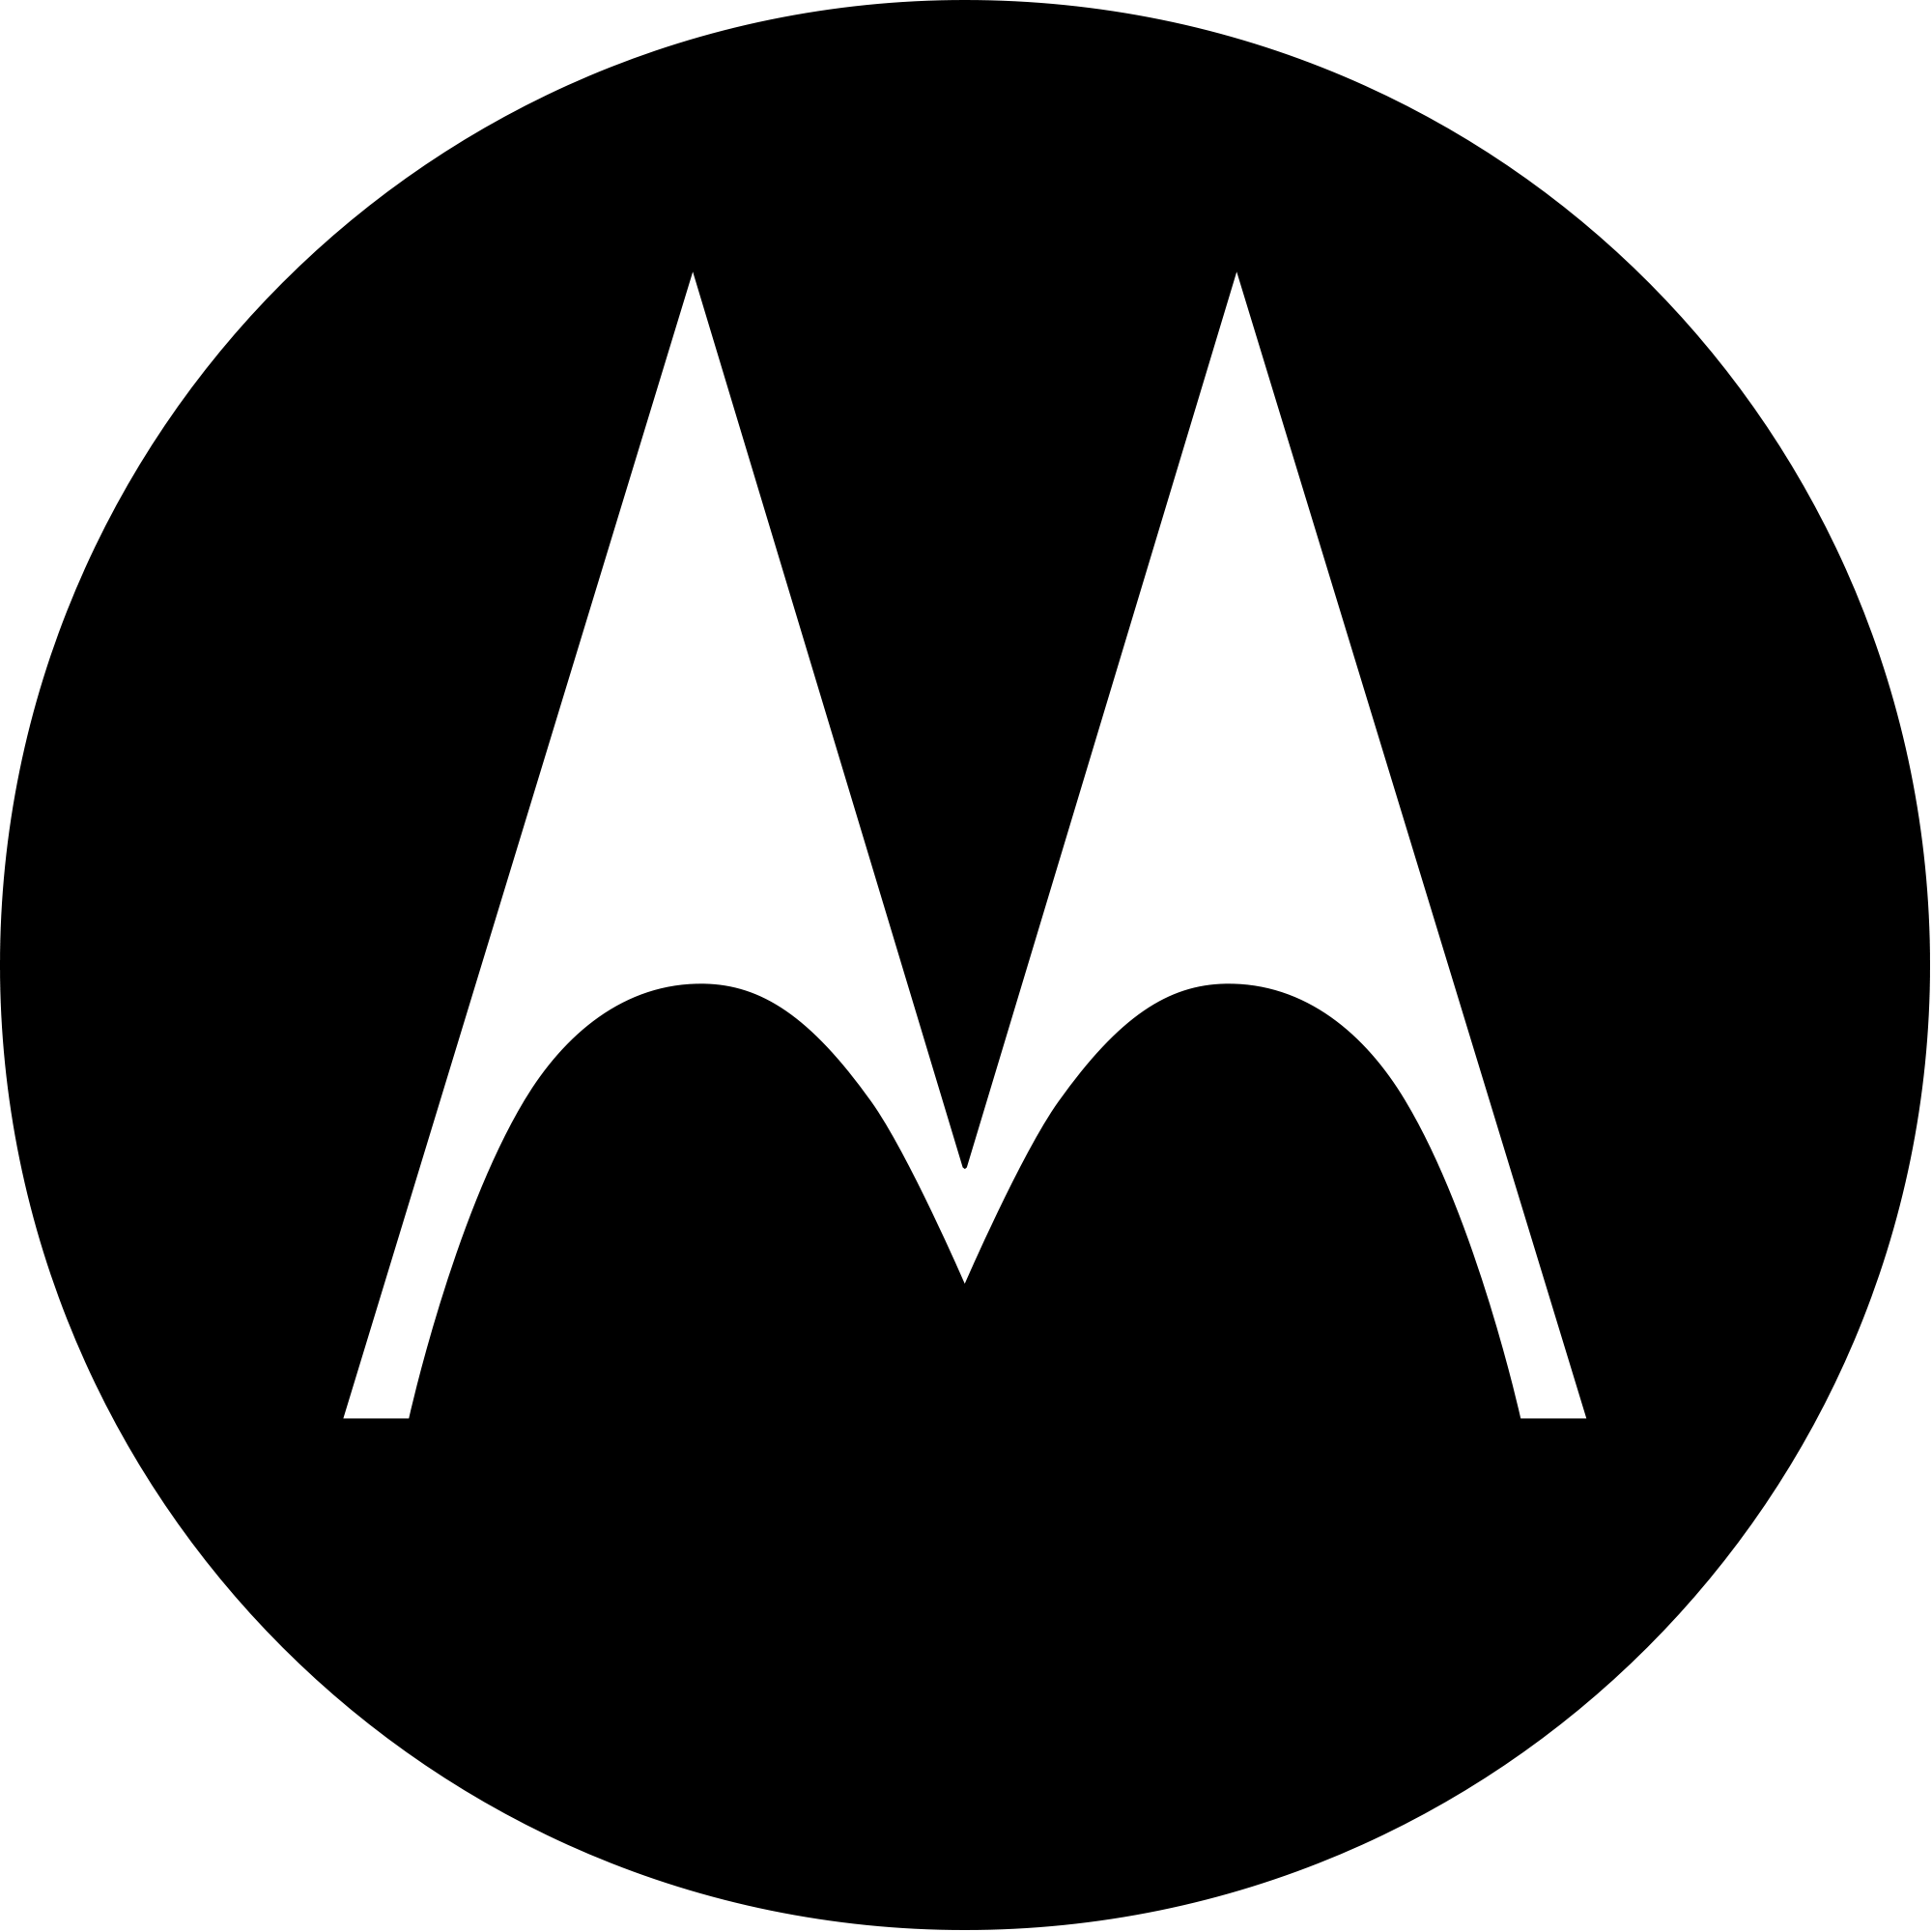 White M Logo - File:Motorola M symbol black.svg - Wikimedia Commons